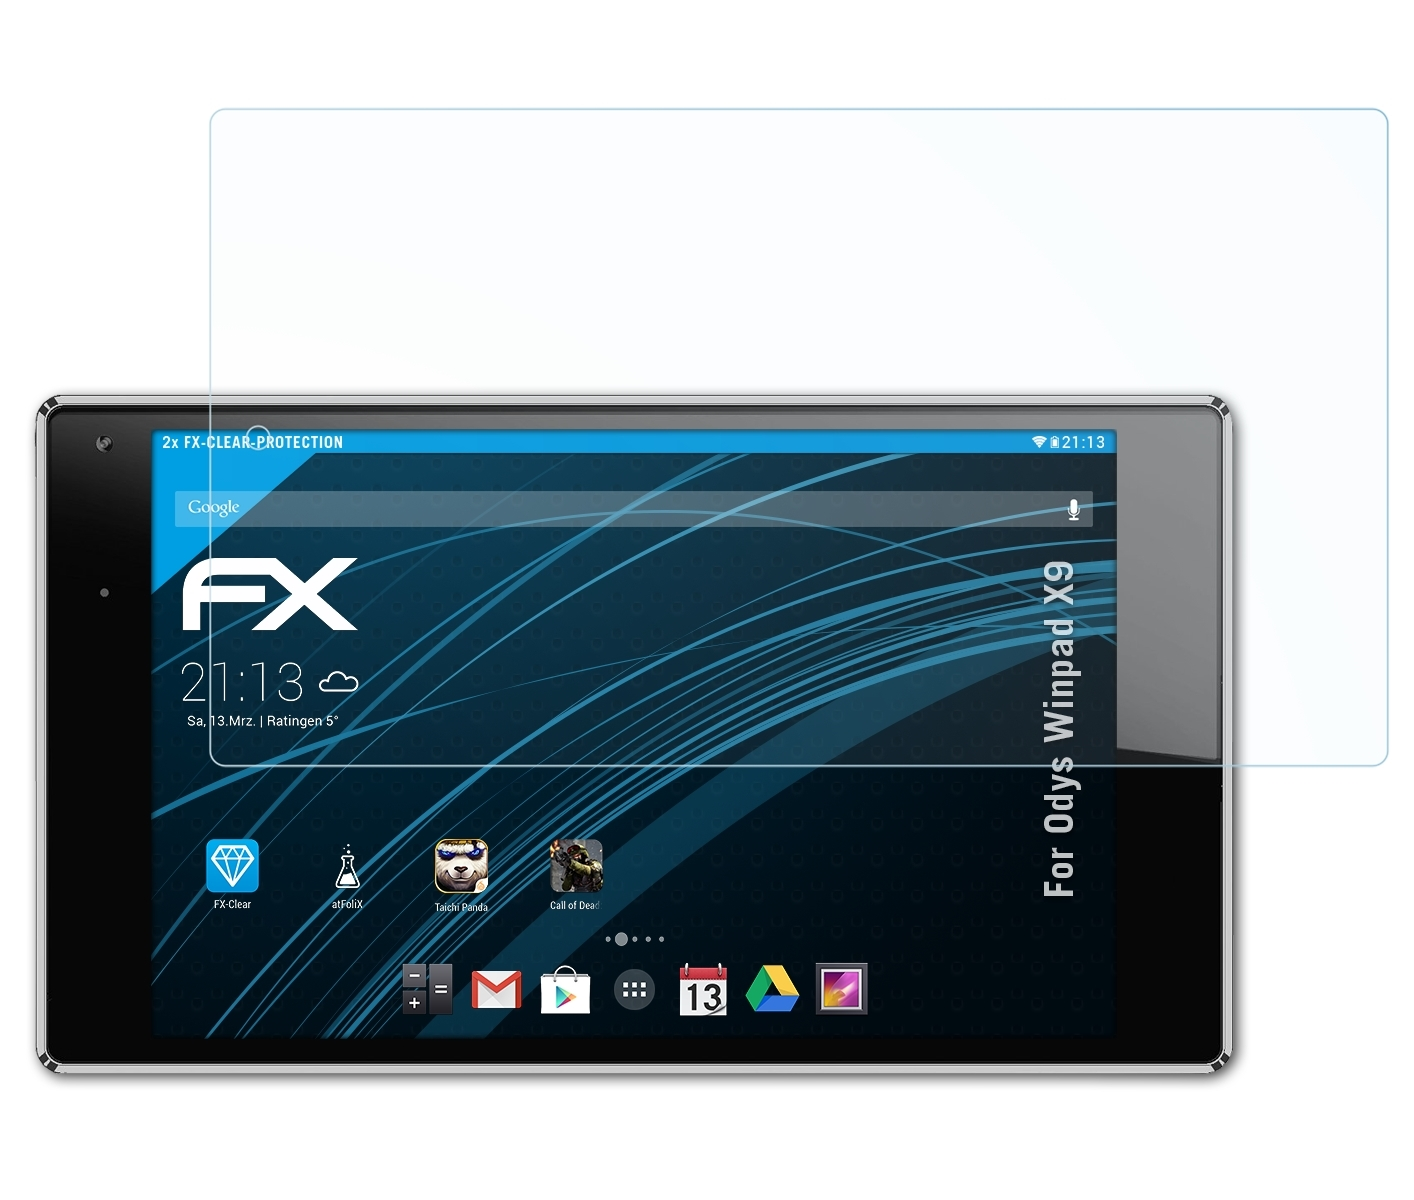 ATFOLIX 2x FX-Clear X9) Displayschutz(für Winpad Odys